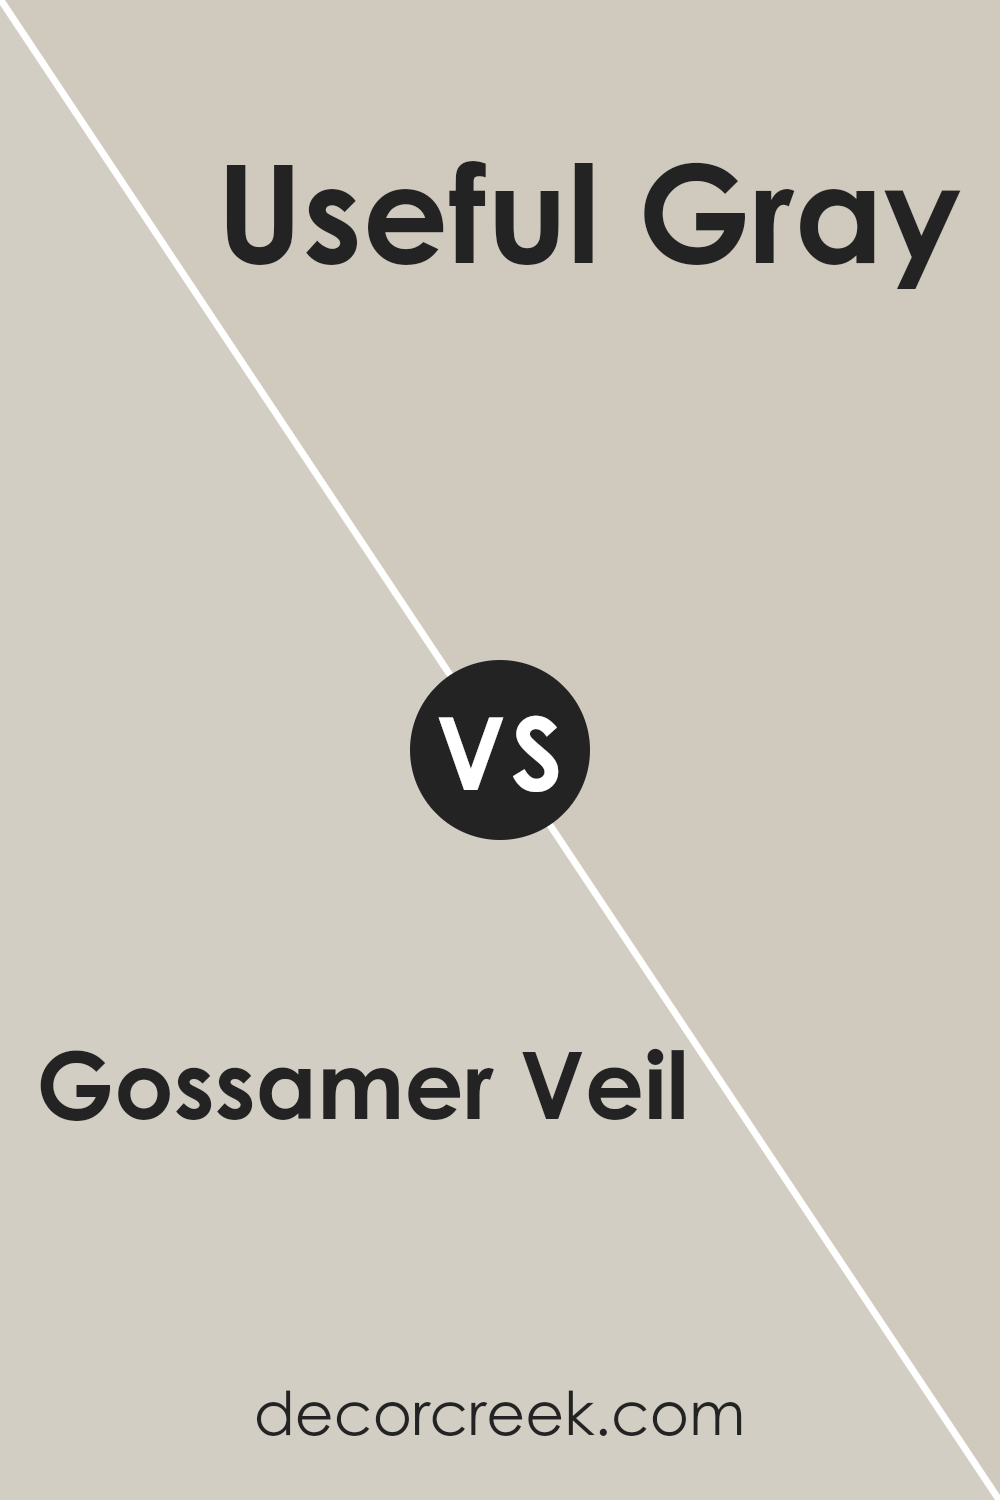 gossamer_veil_sw_9165_vs_useful_gray_sw_7050